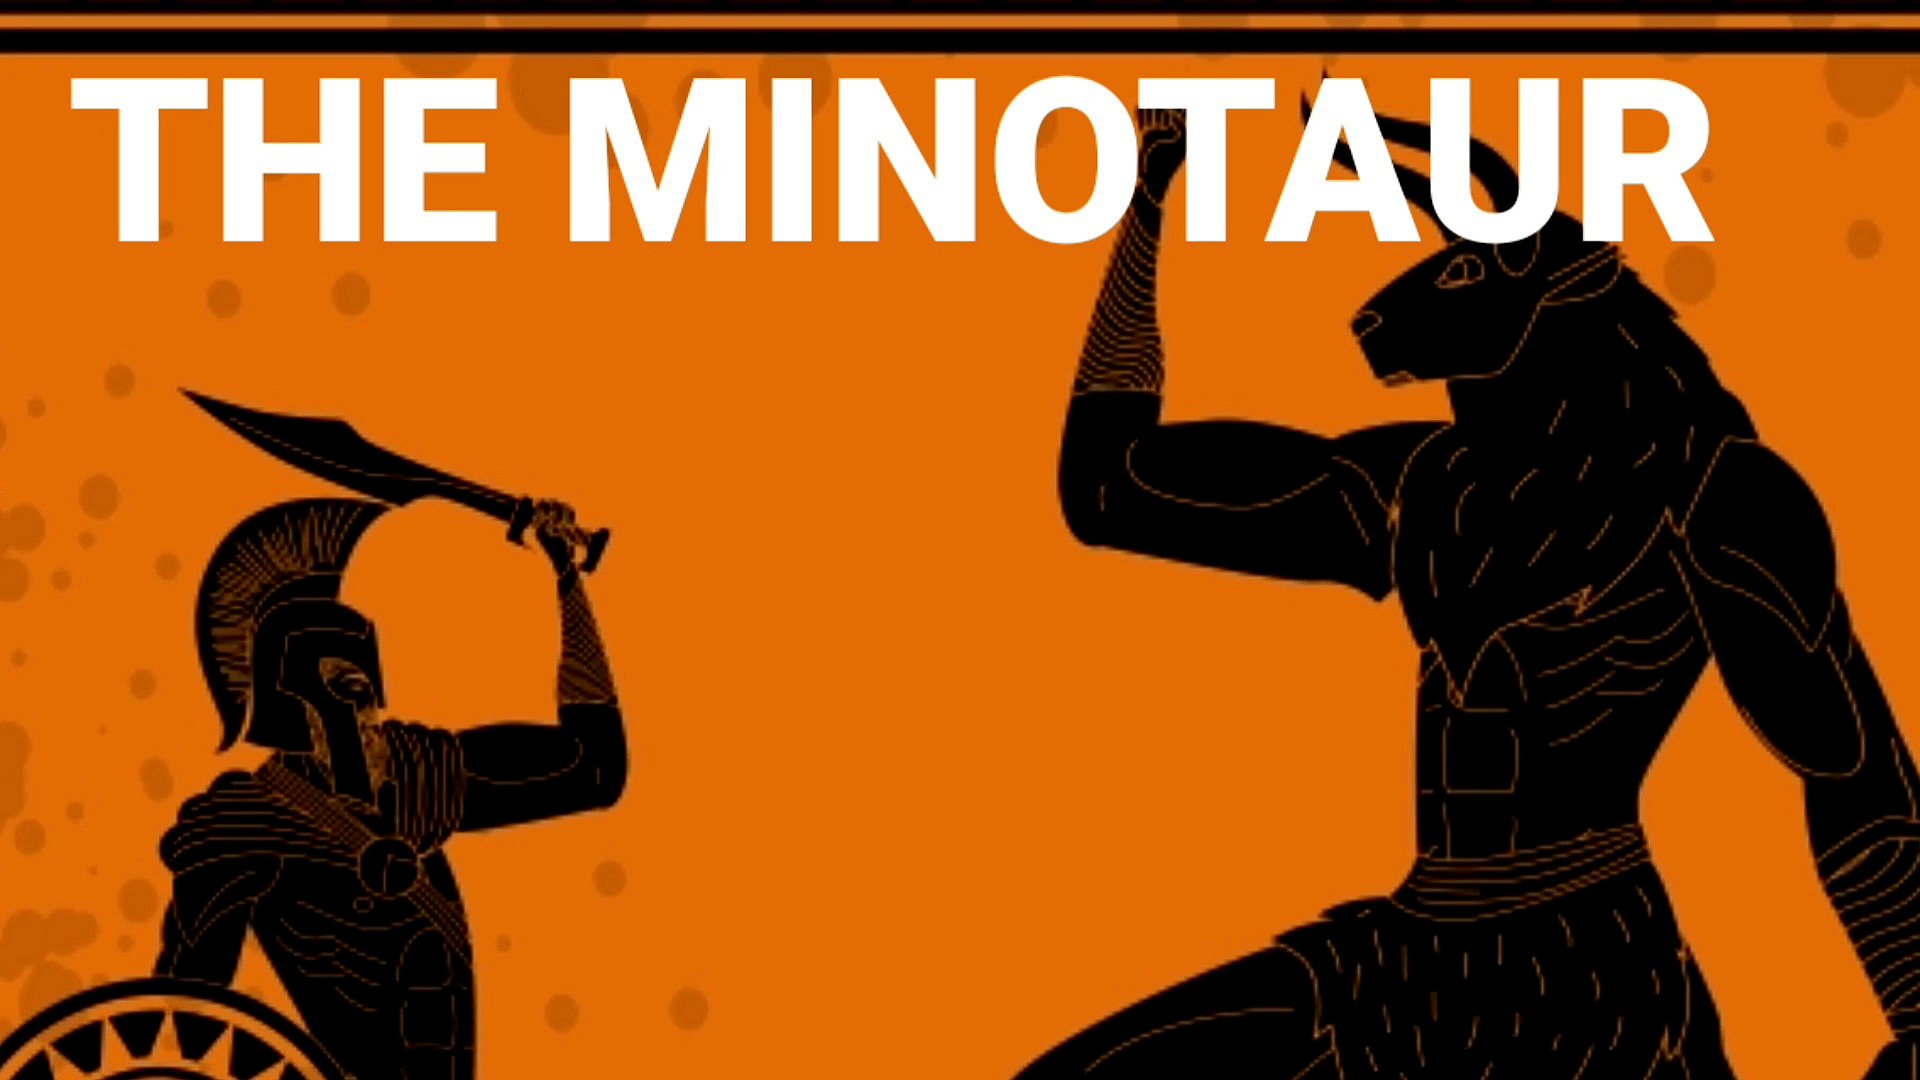 Greeks Workshop - The Minotaur